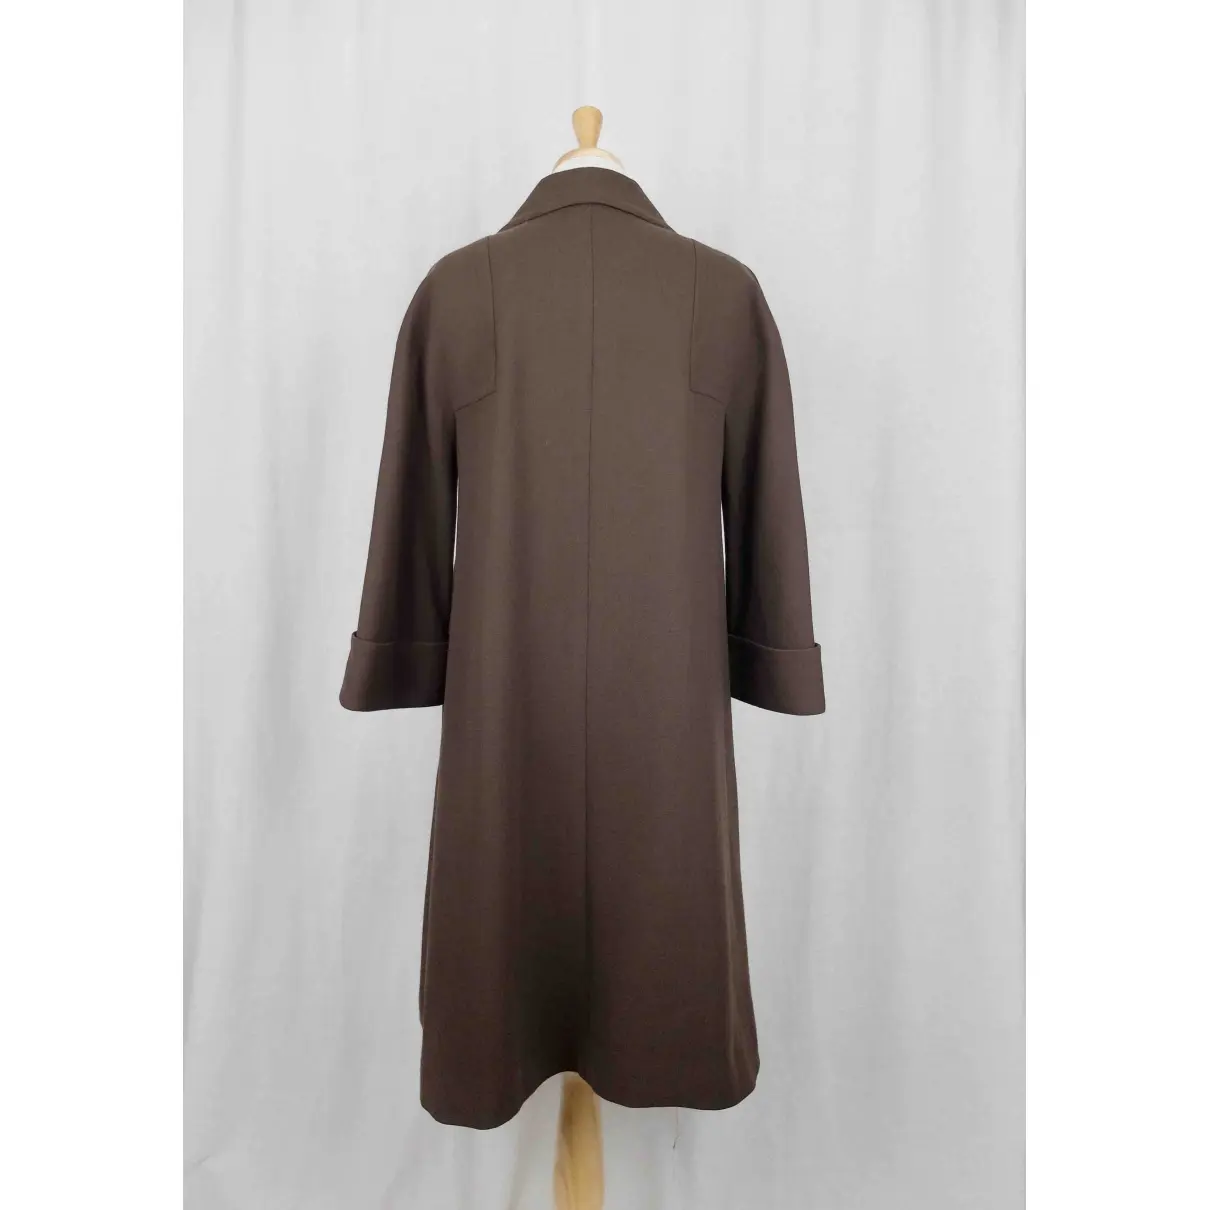 Pierre Cardin Coat for sale - Vintage